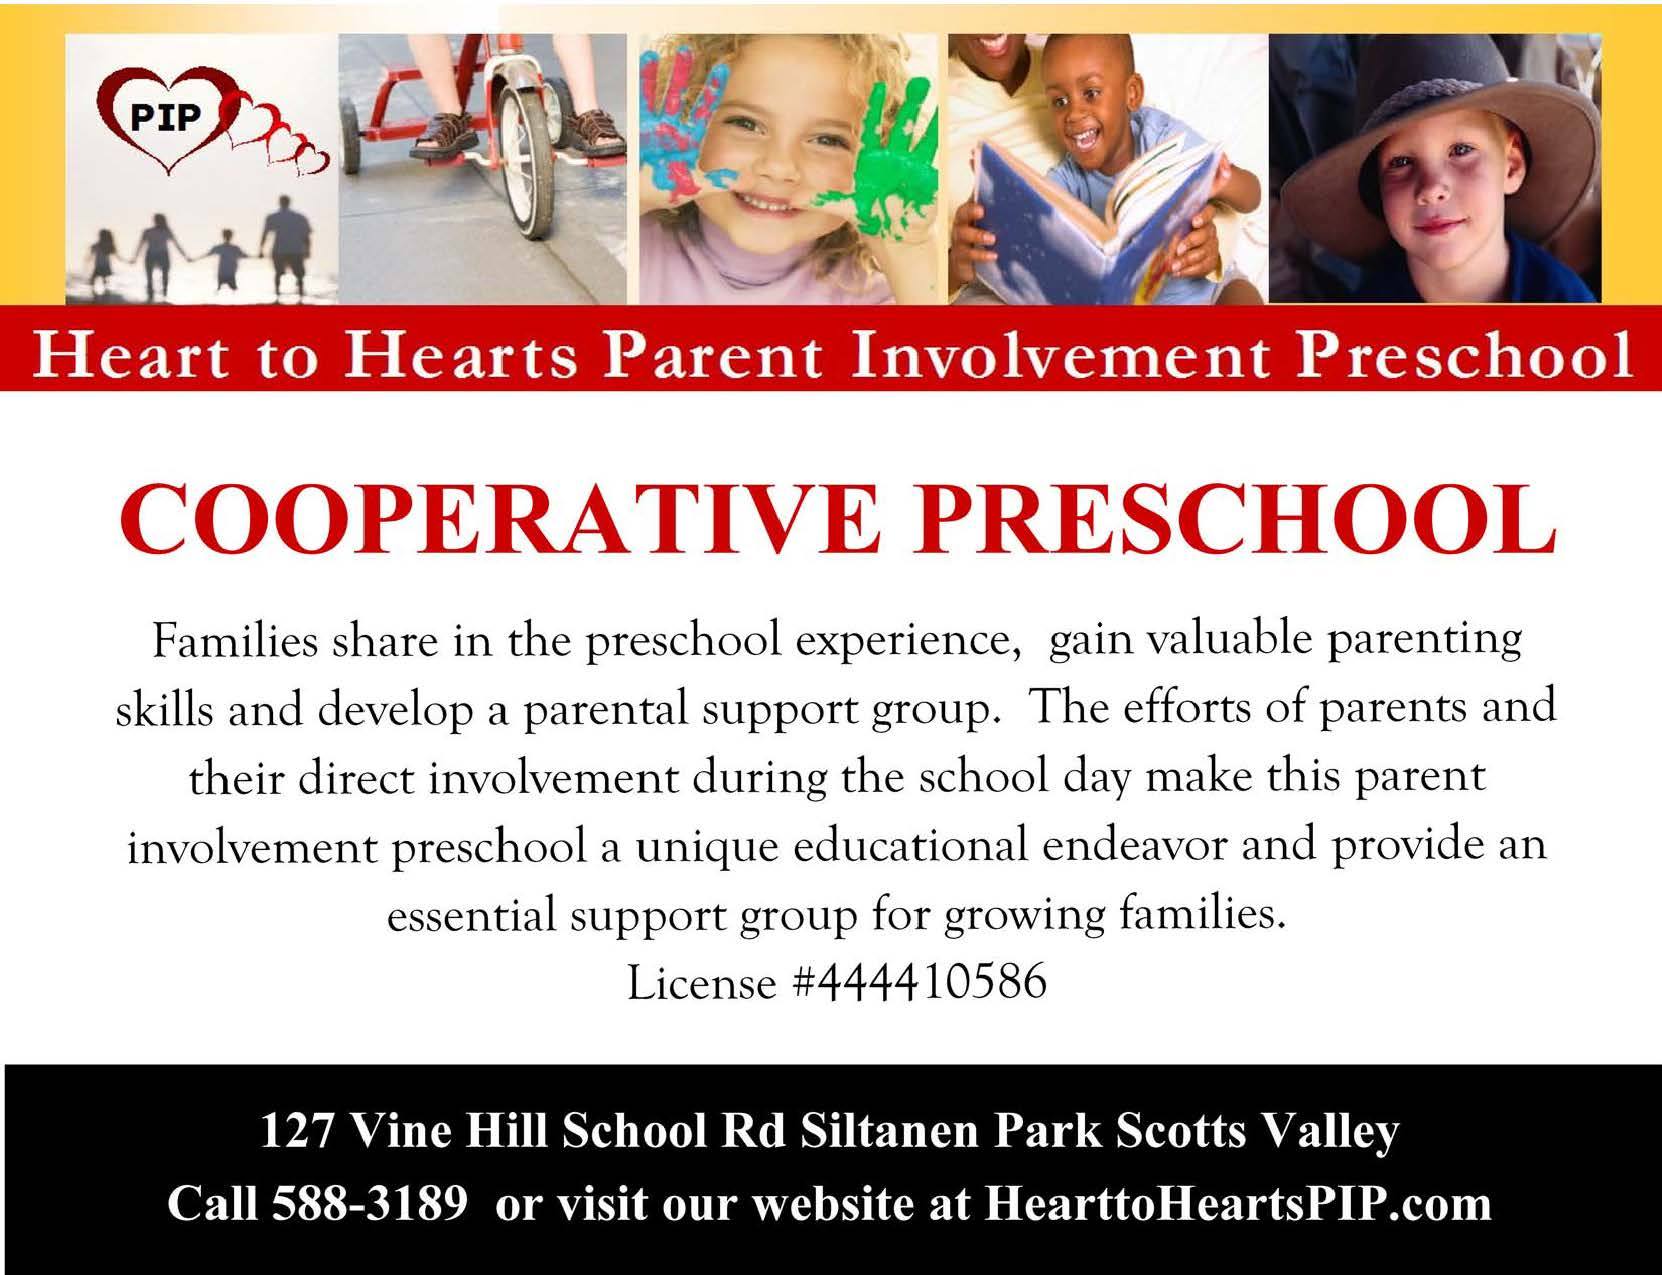 Local Organization Spotlight: Heart to Hearts Parent Involvement Preschool